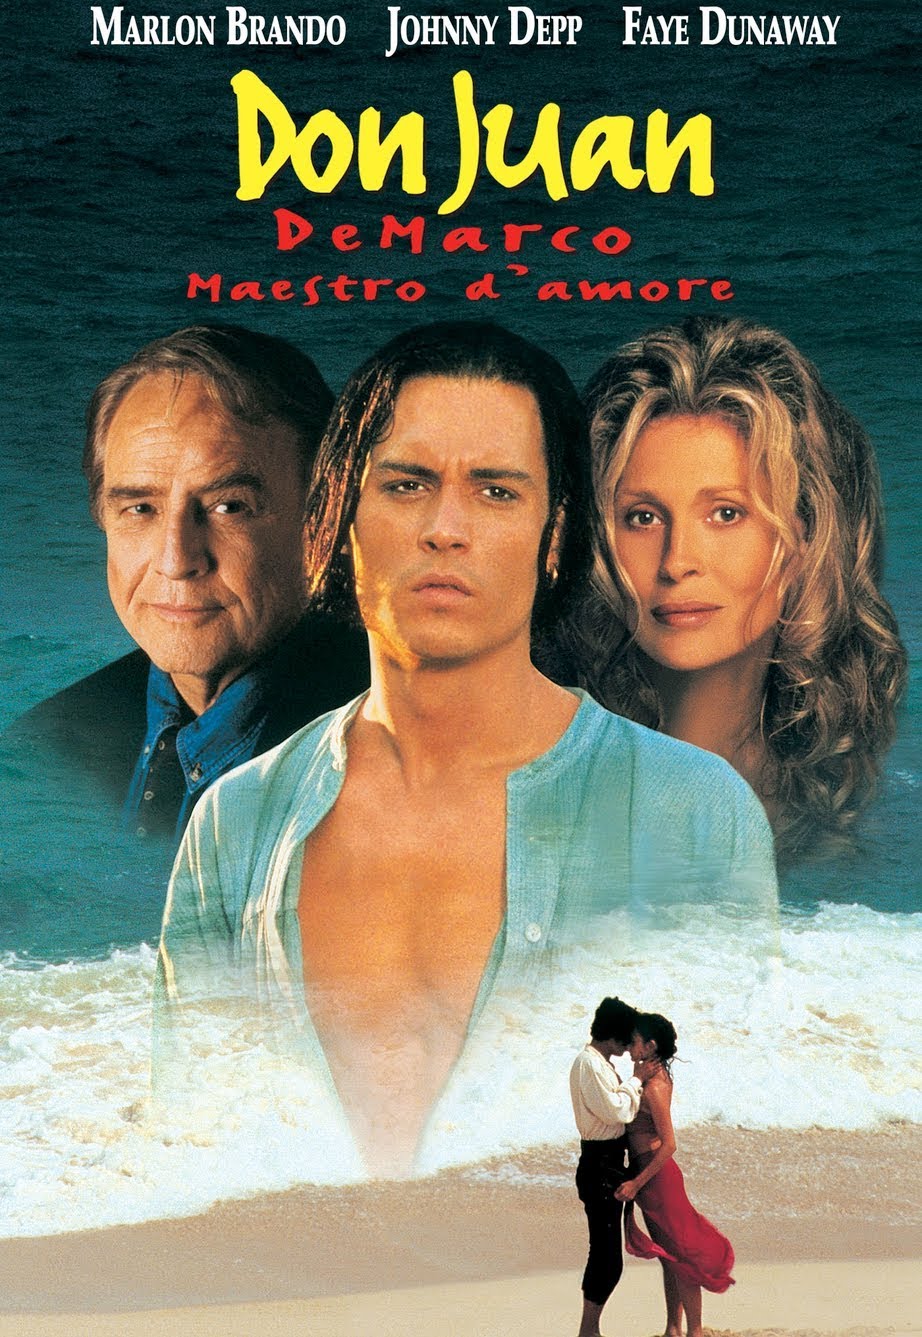 Don Juan De Marco maestro d’amore [HD] (1995)